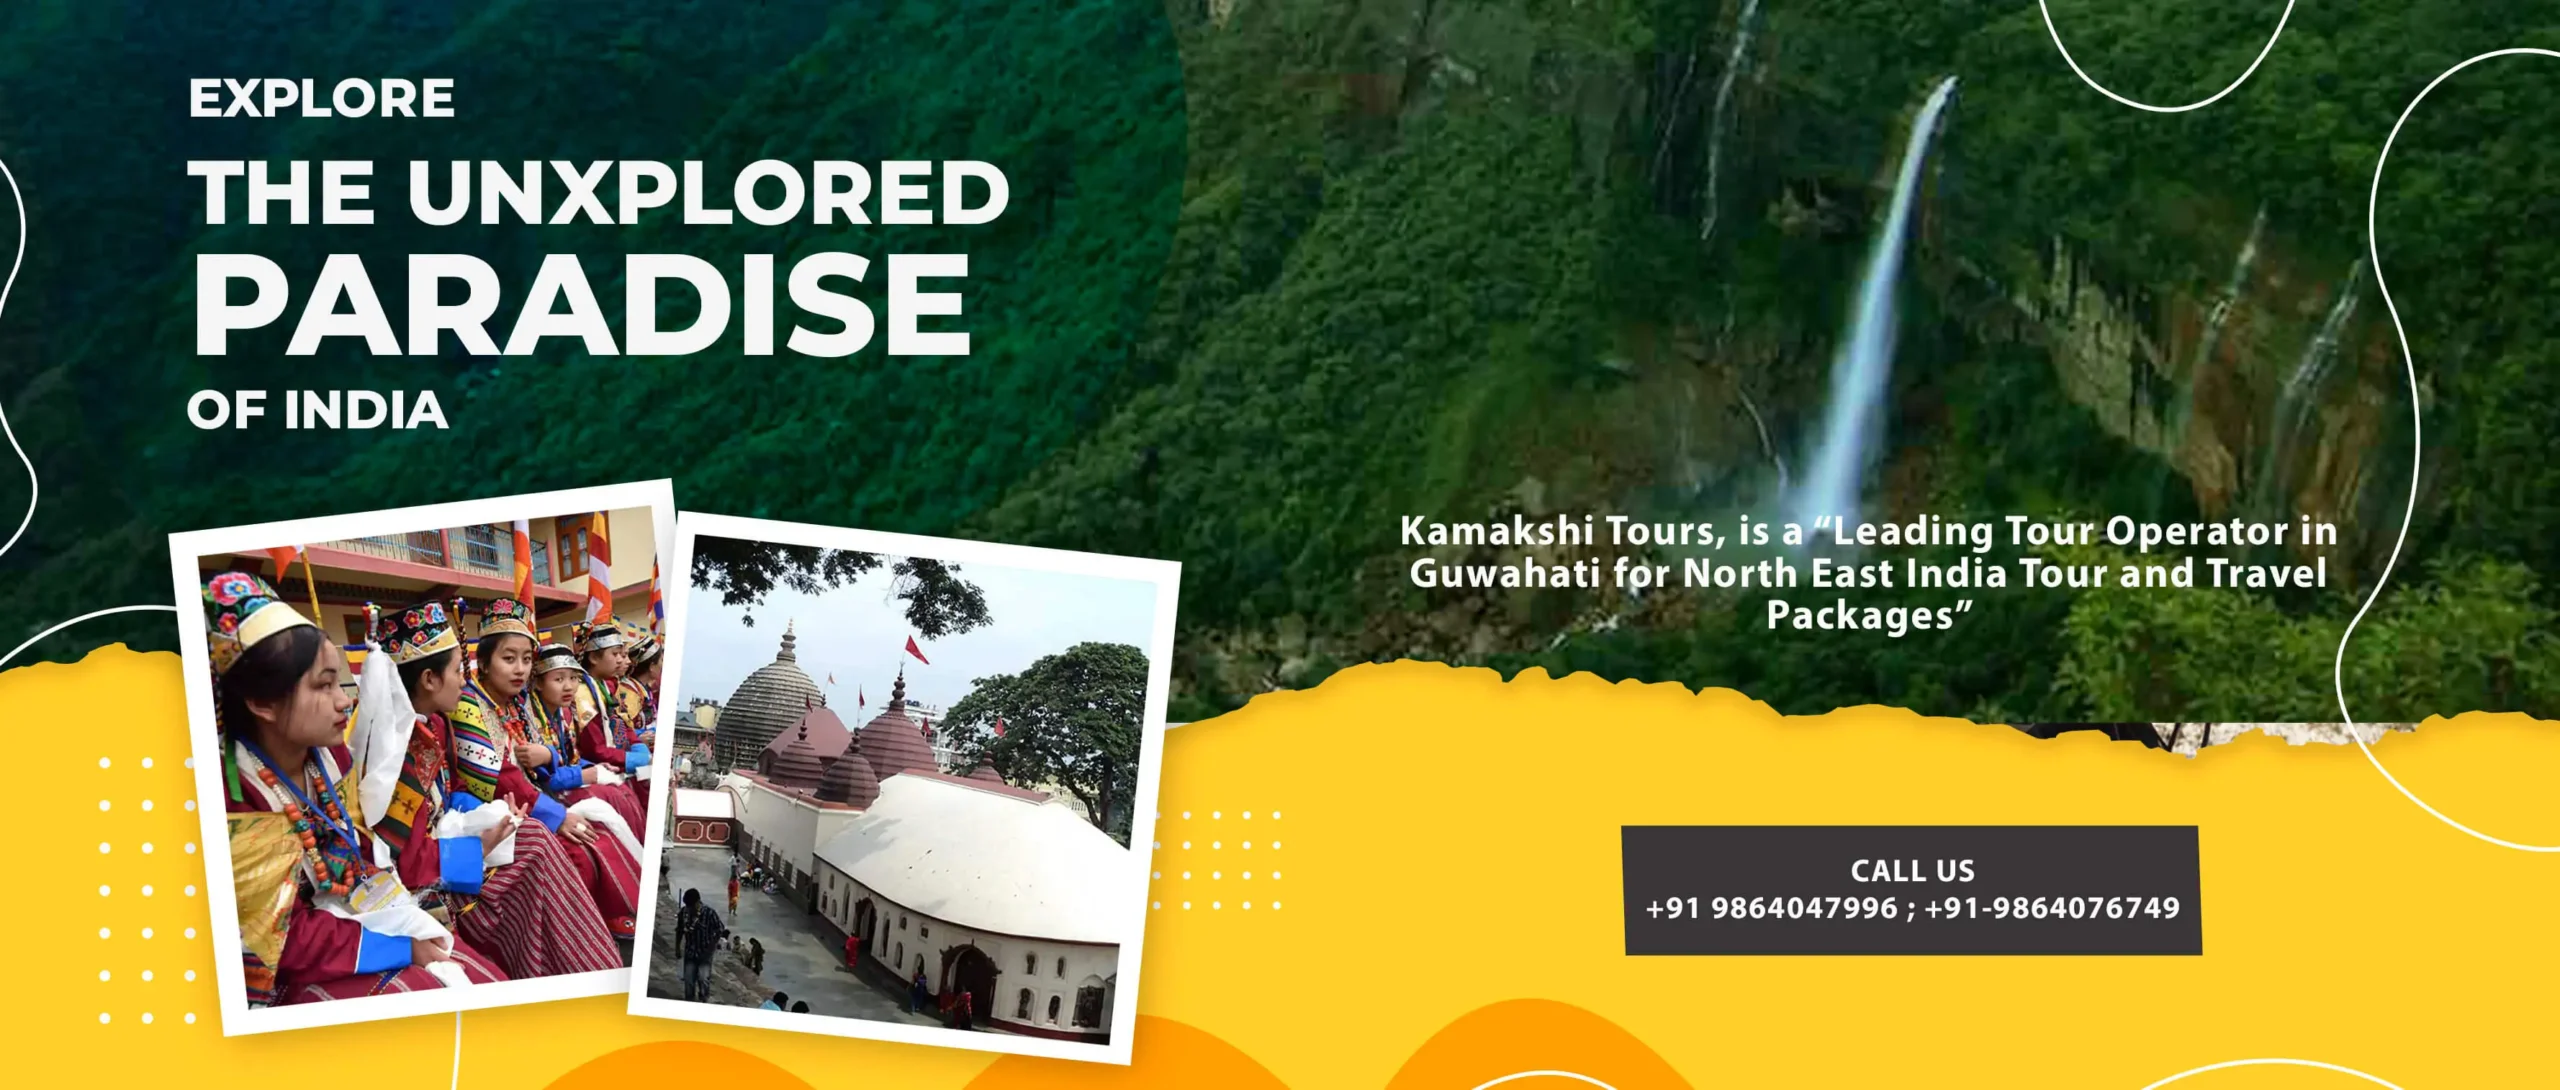 Kamakshi Tours Homepage Banner